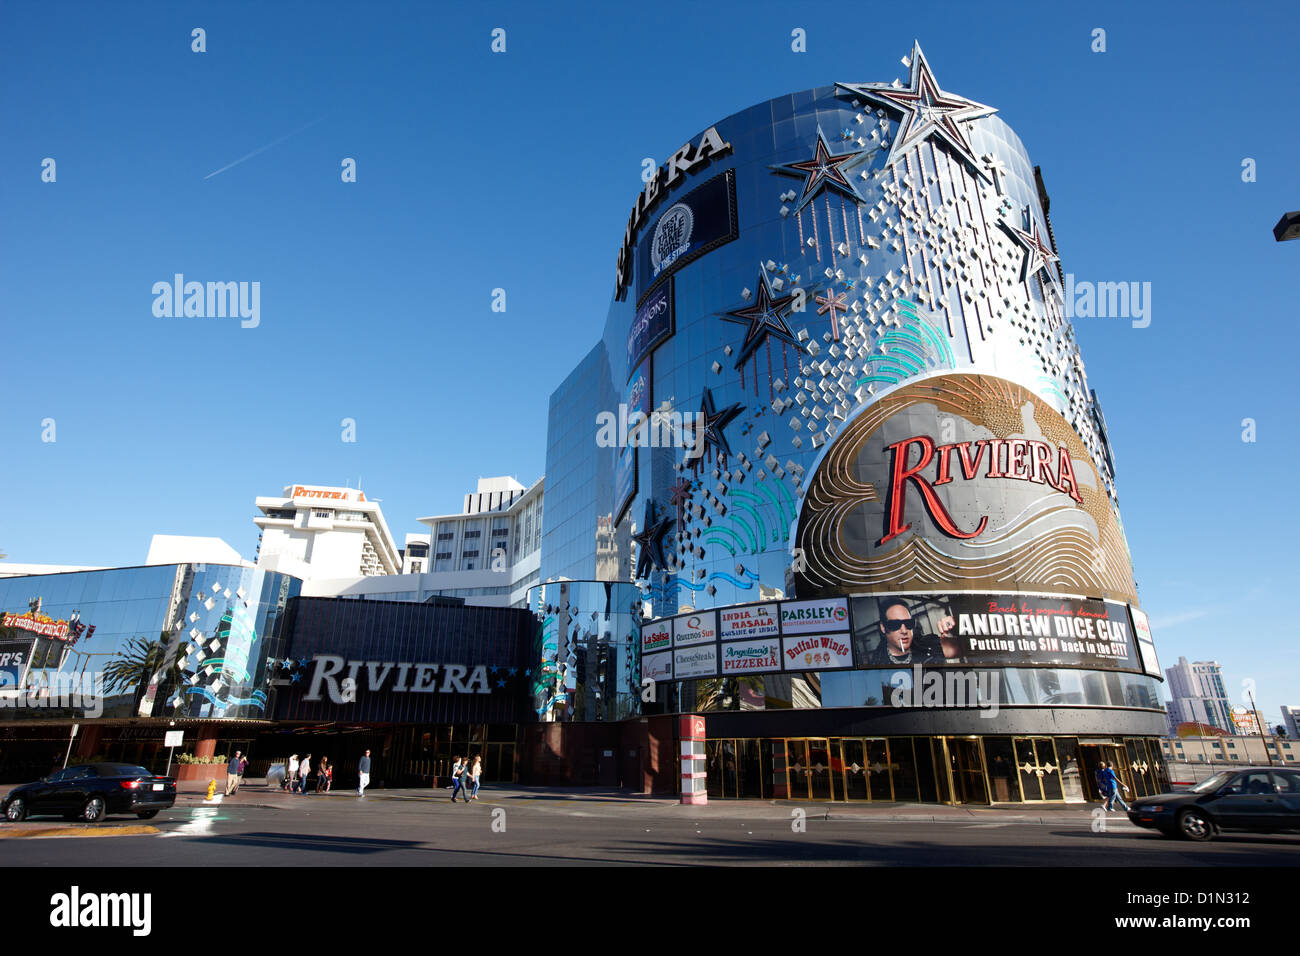 Riviera Hotel and Casino in Las Vegas Editorial Photo - Image of america,  resort: 37933891